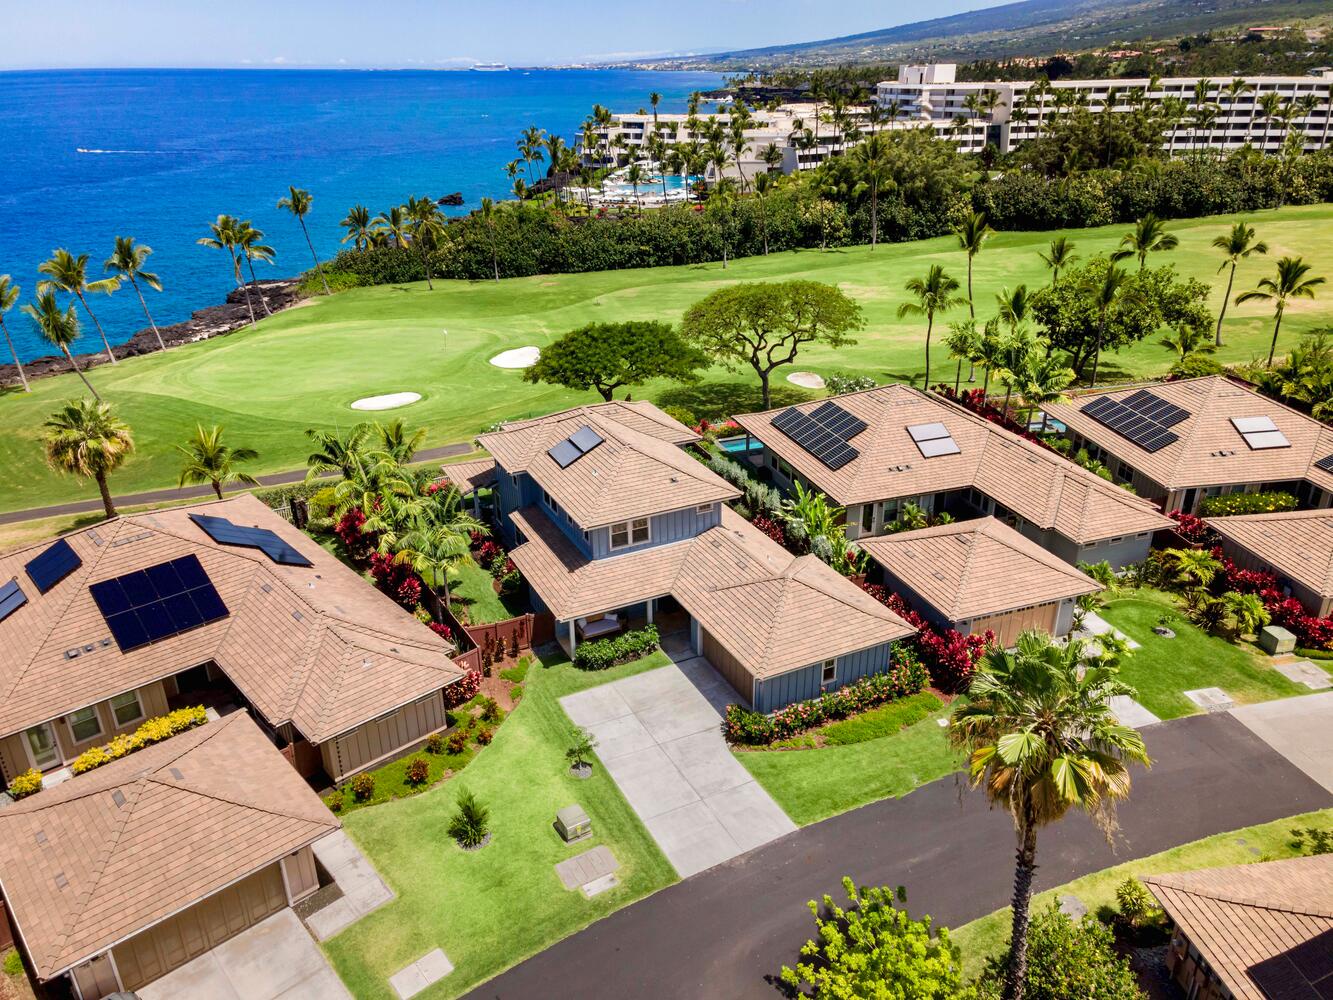 Kailua-Kona Vacation Rentals, Holua Kai #26 - Aerial view of Holua Kai #26 and the lush residential area.